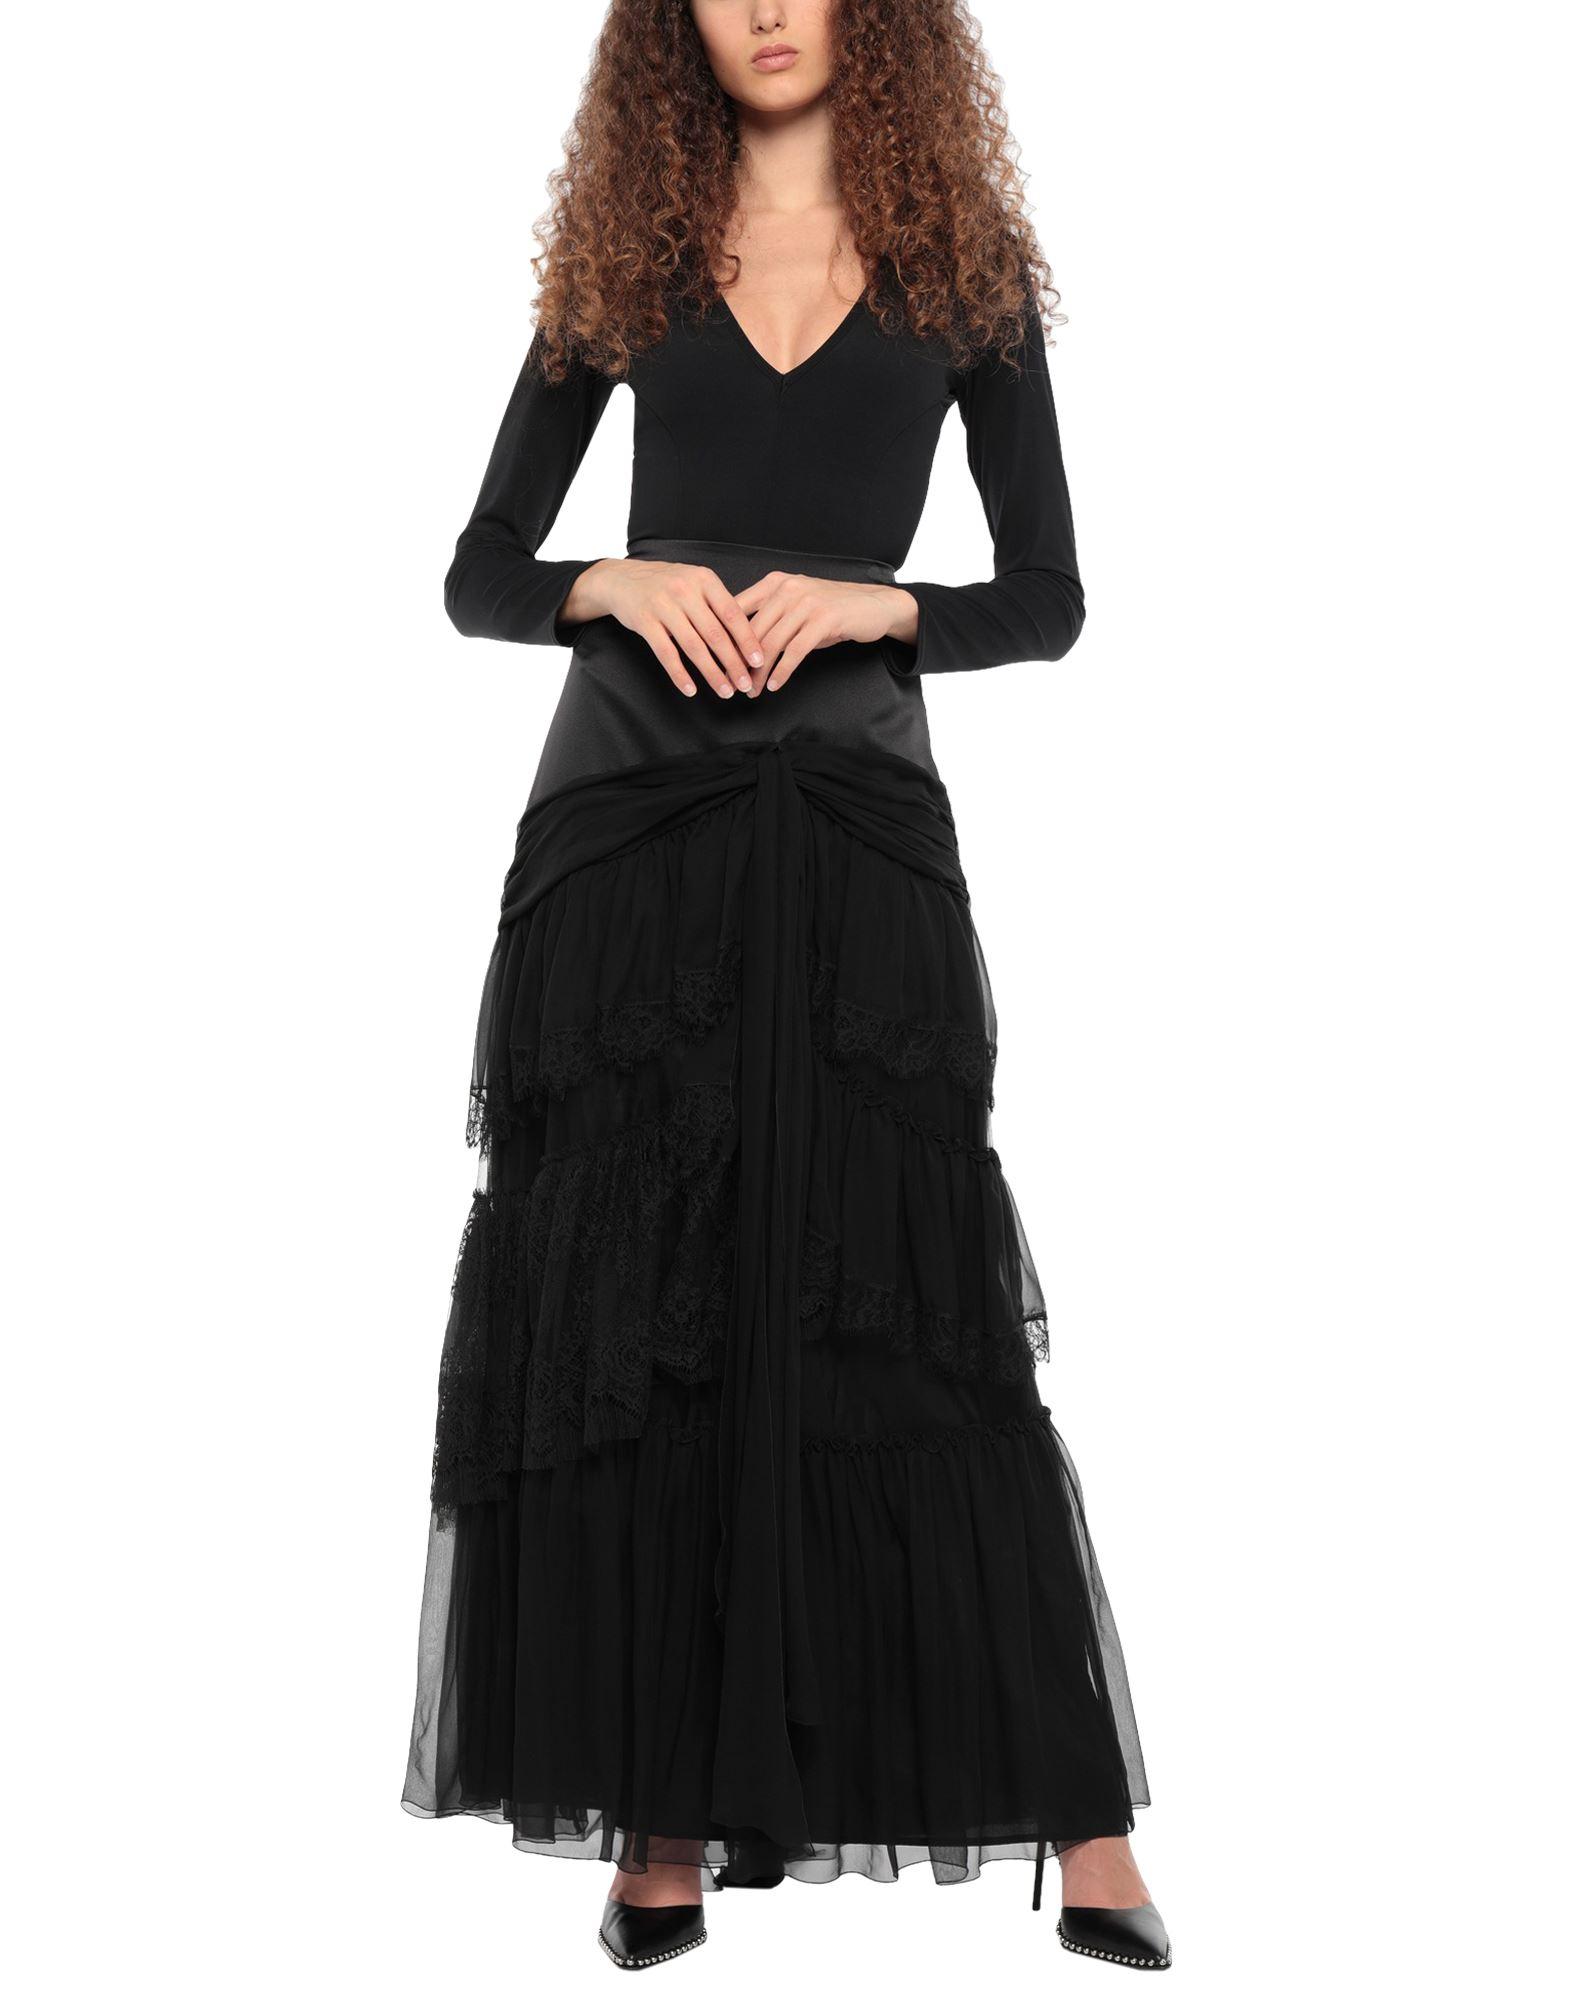 Alberta Ferretti Lace Long Skirt in Black - Lyst